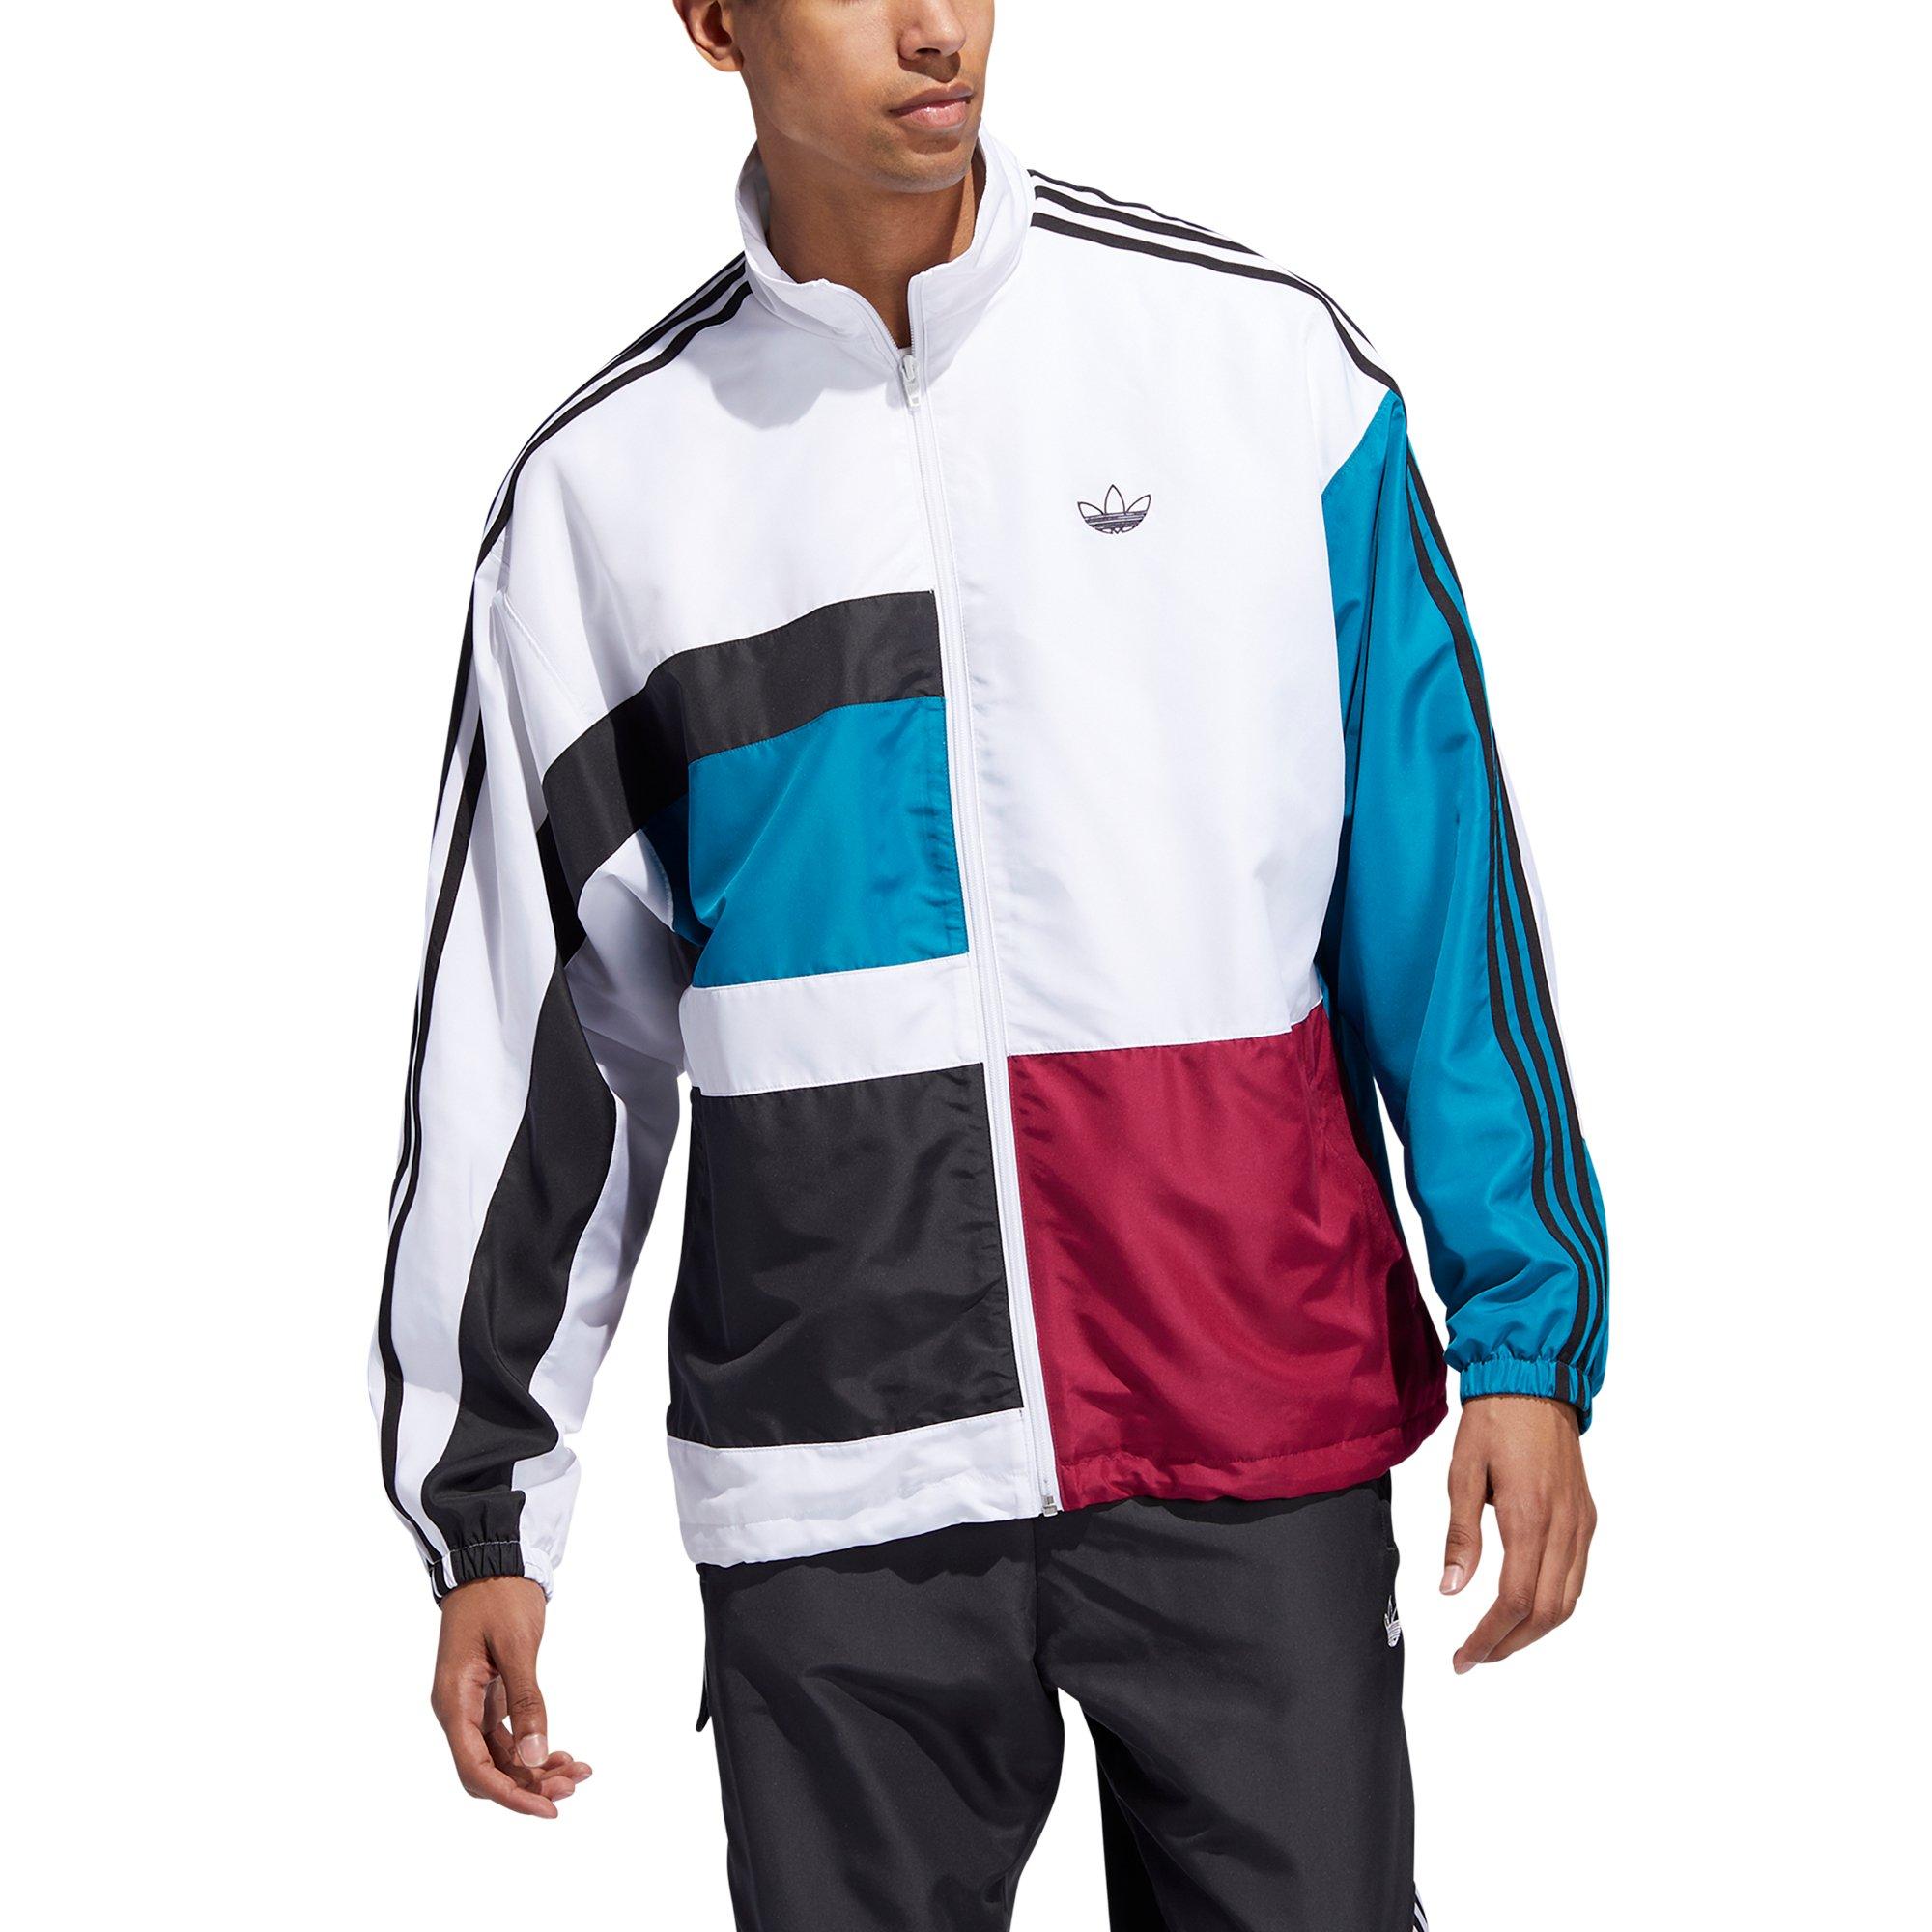 hibbett sports adidas jackets